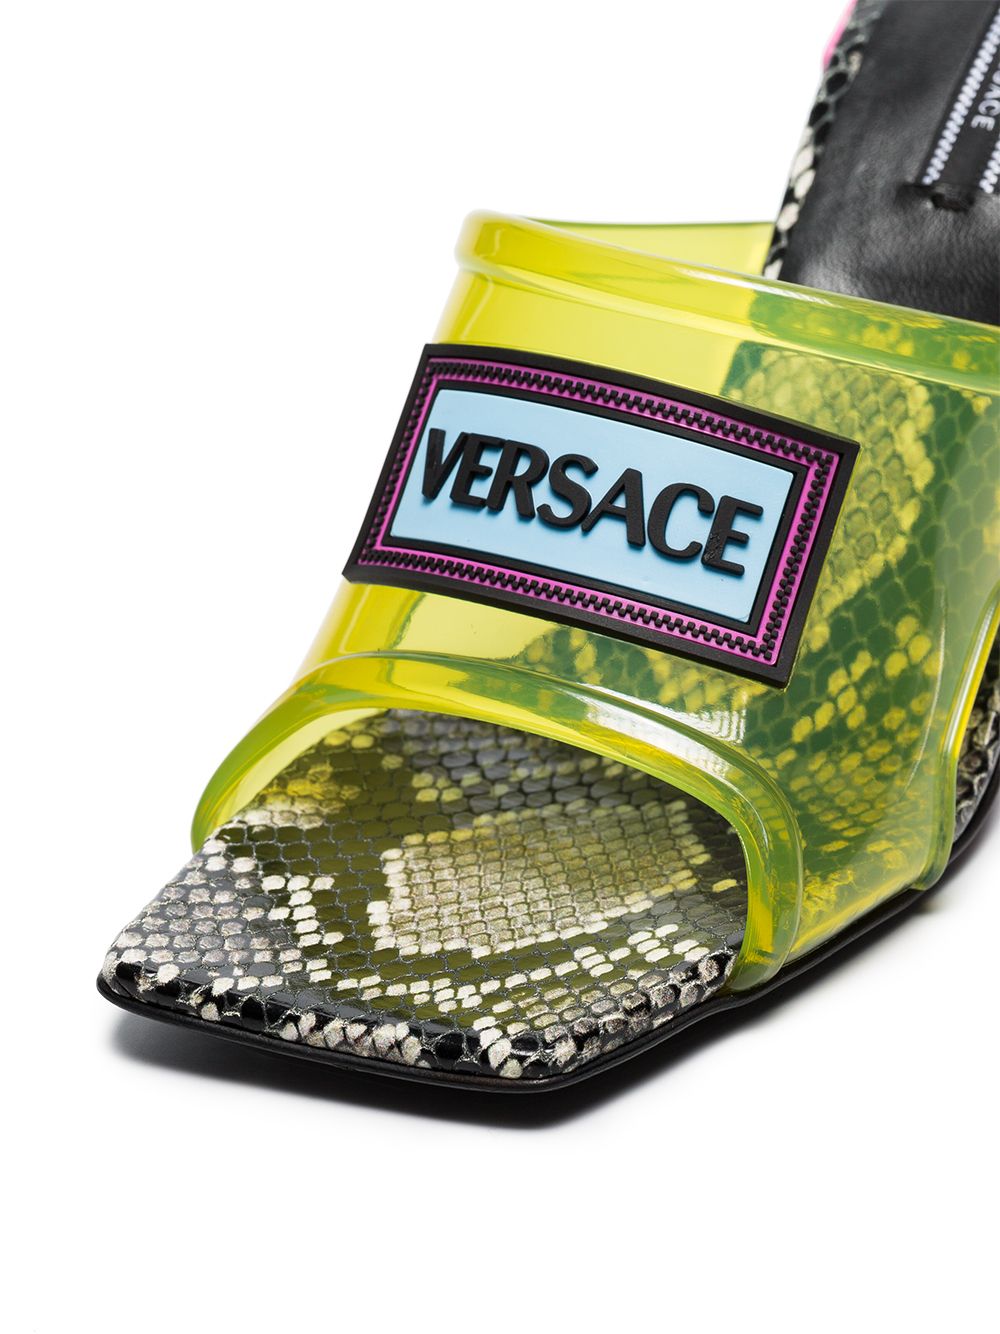 Versace 70 PVC Snake Sandals $875 - Buy 